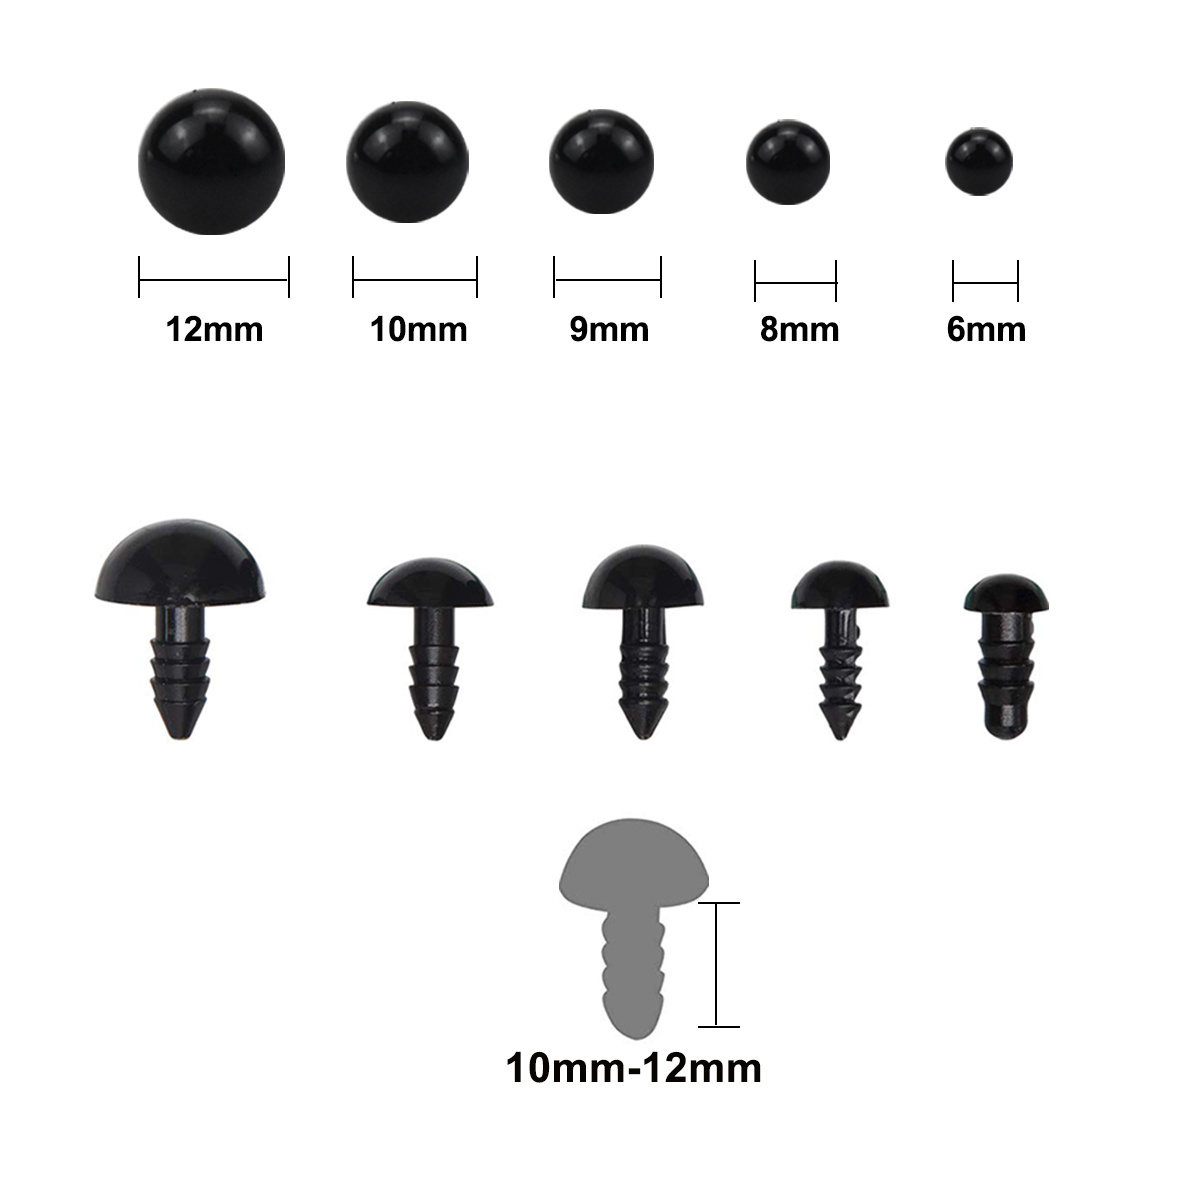 100PCS 6mm-12mm Black Plastic Safety Eyes For Toys Diy Kit